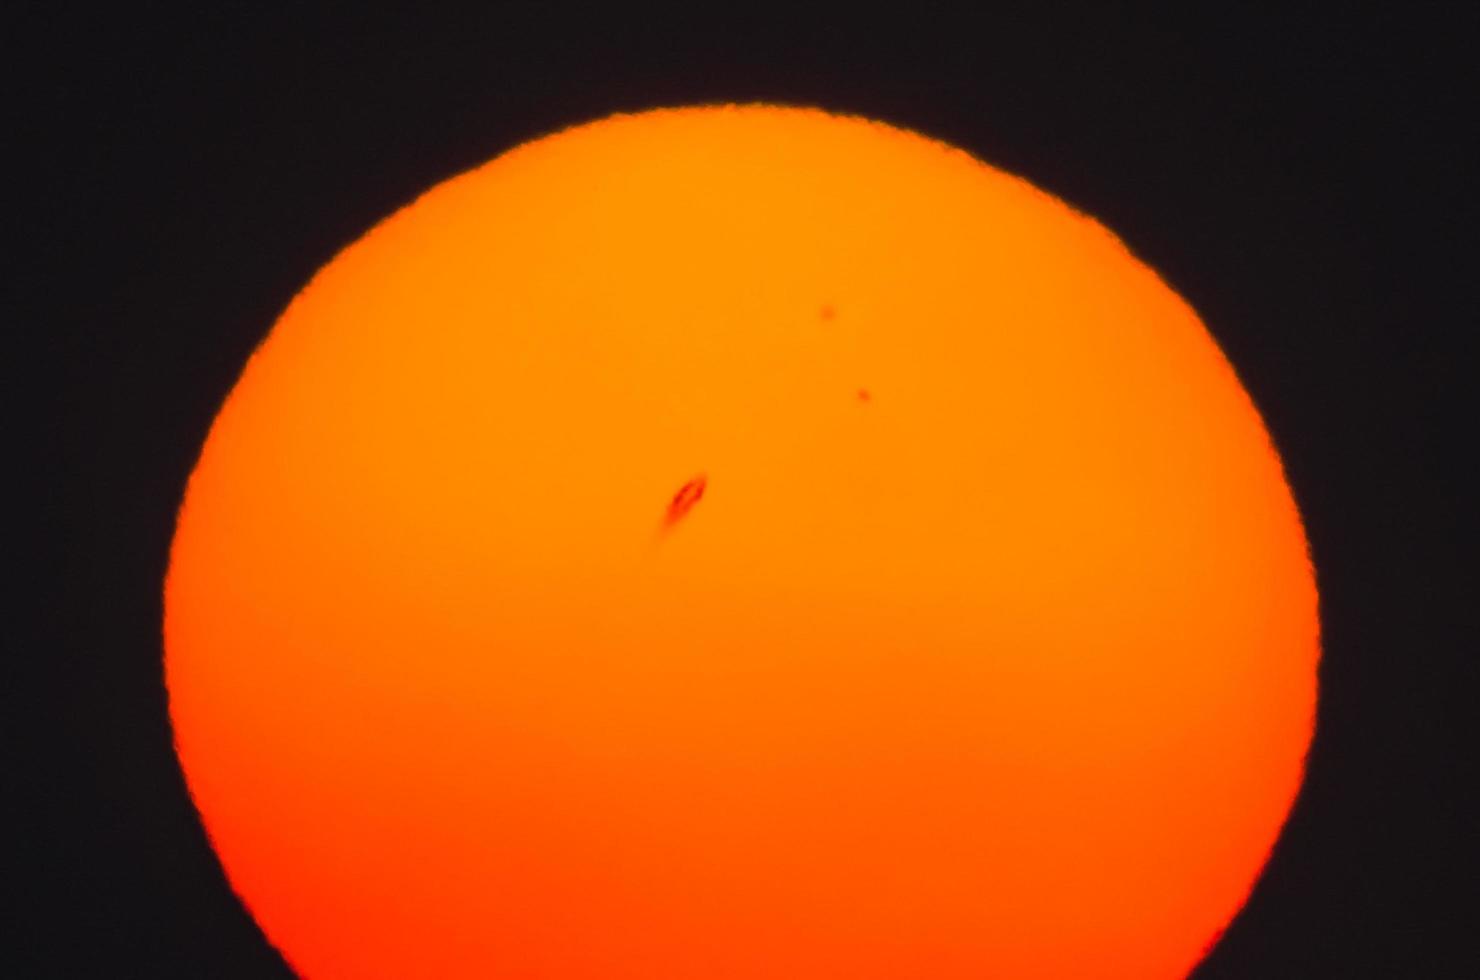 large sun and sunspot photo